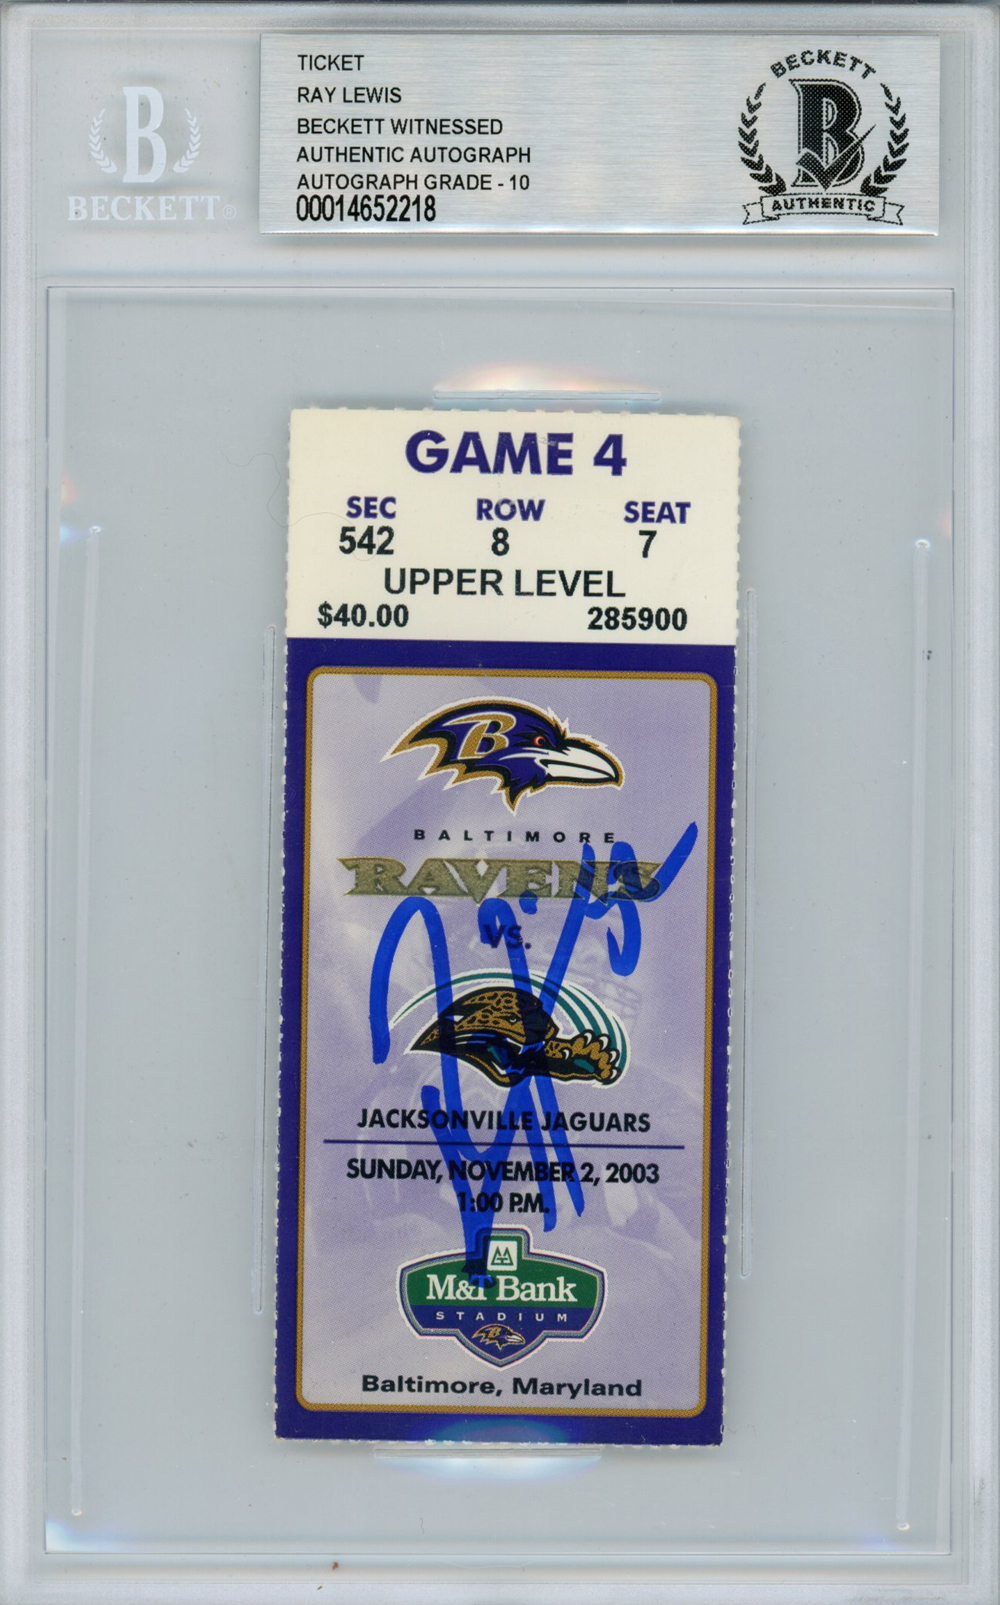 Ray Lewis Autographed/Signed 11/2/2003 vs Jaguars Ticket Beckett Slab